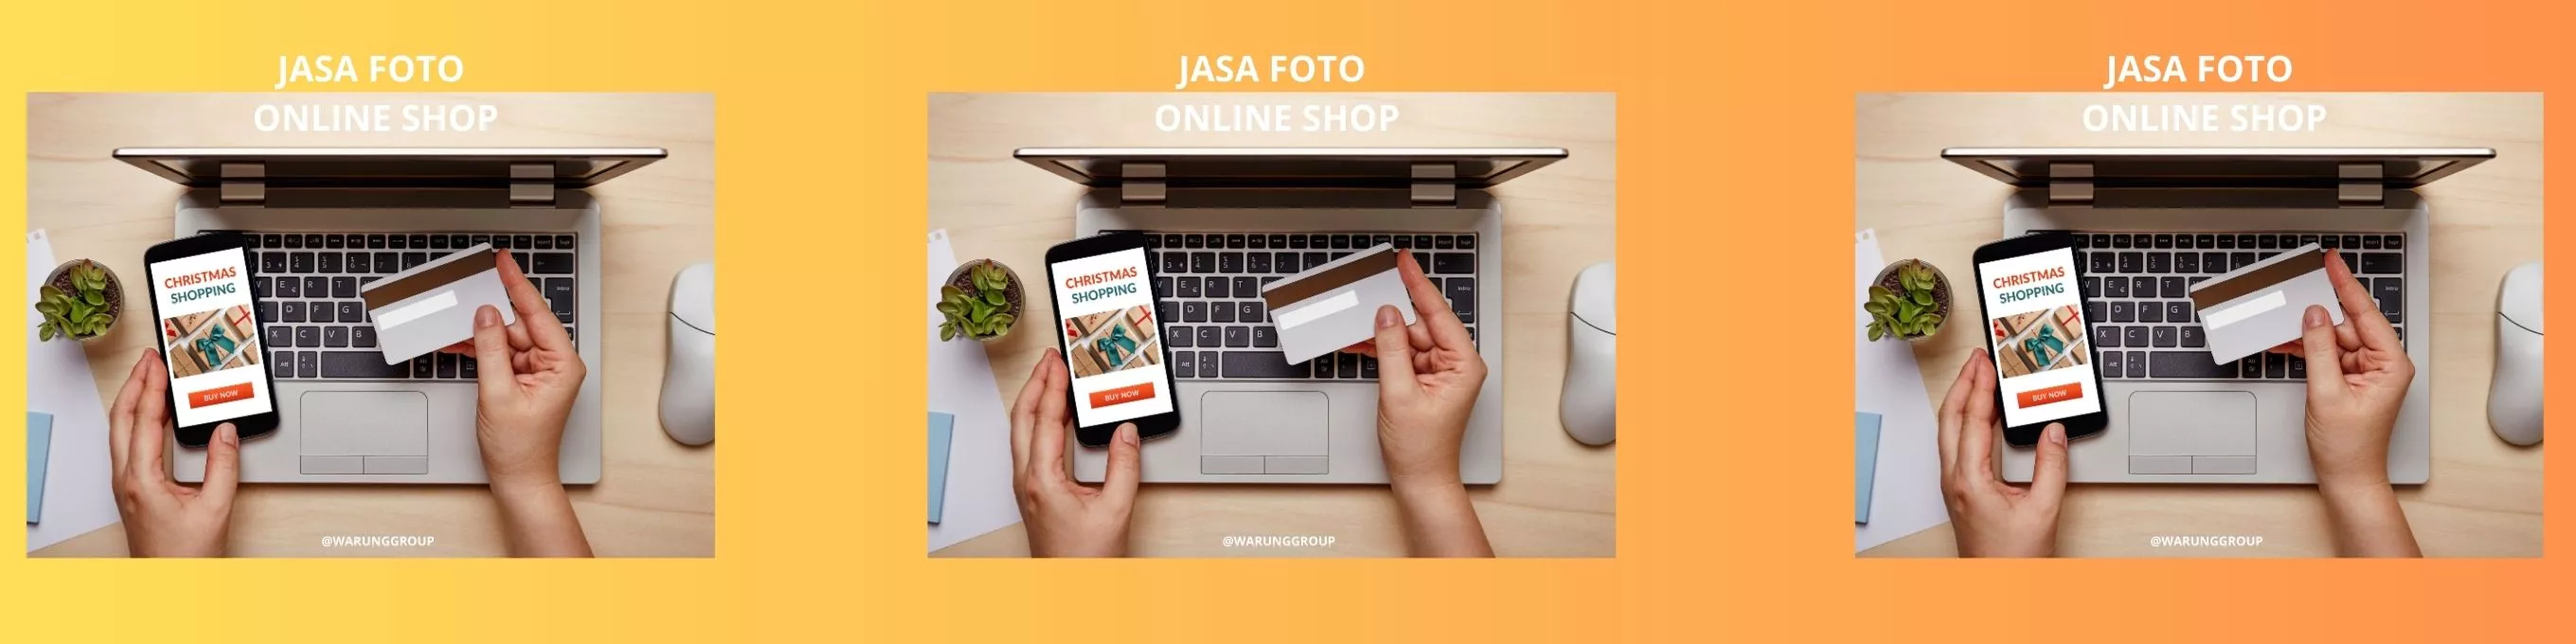 Jasa Foto Online Shop